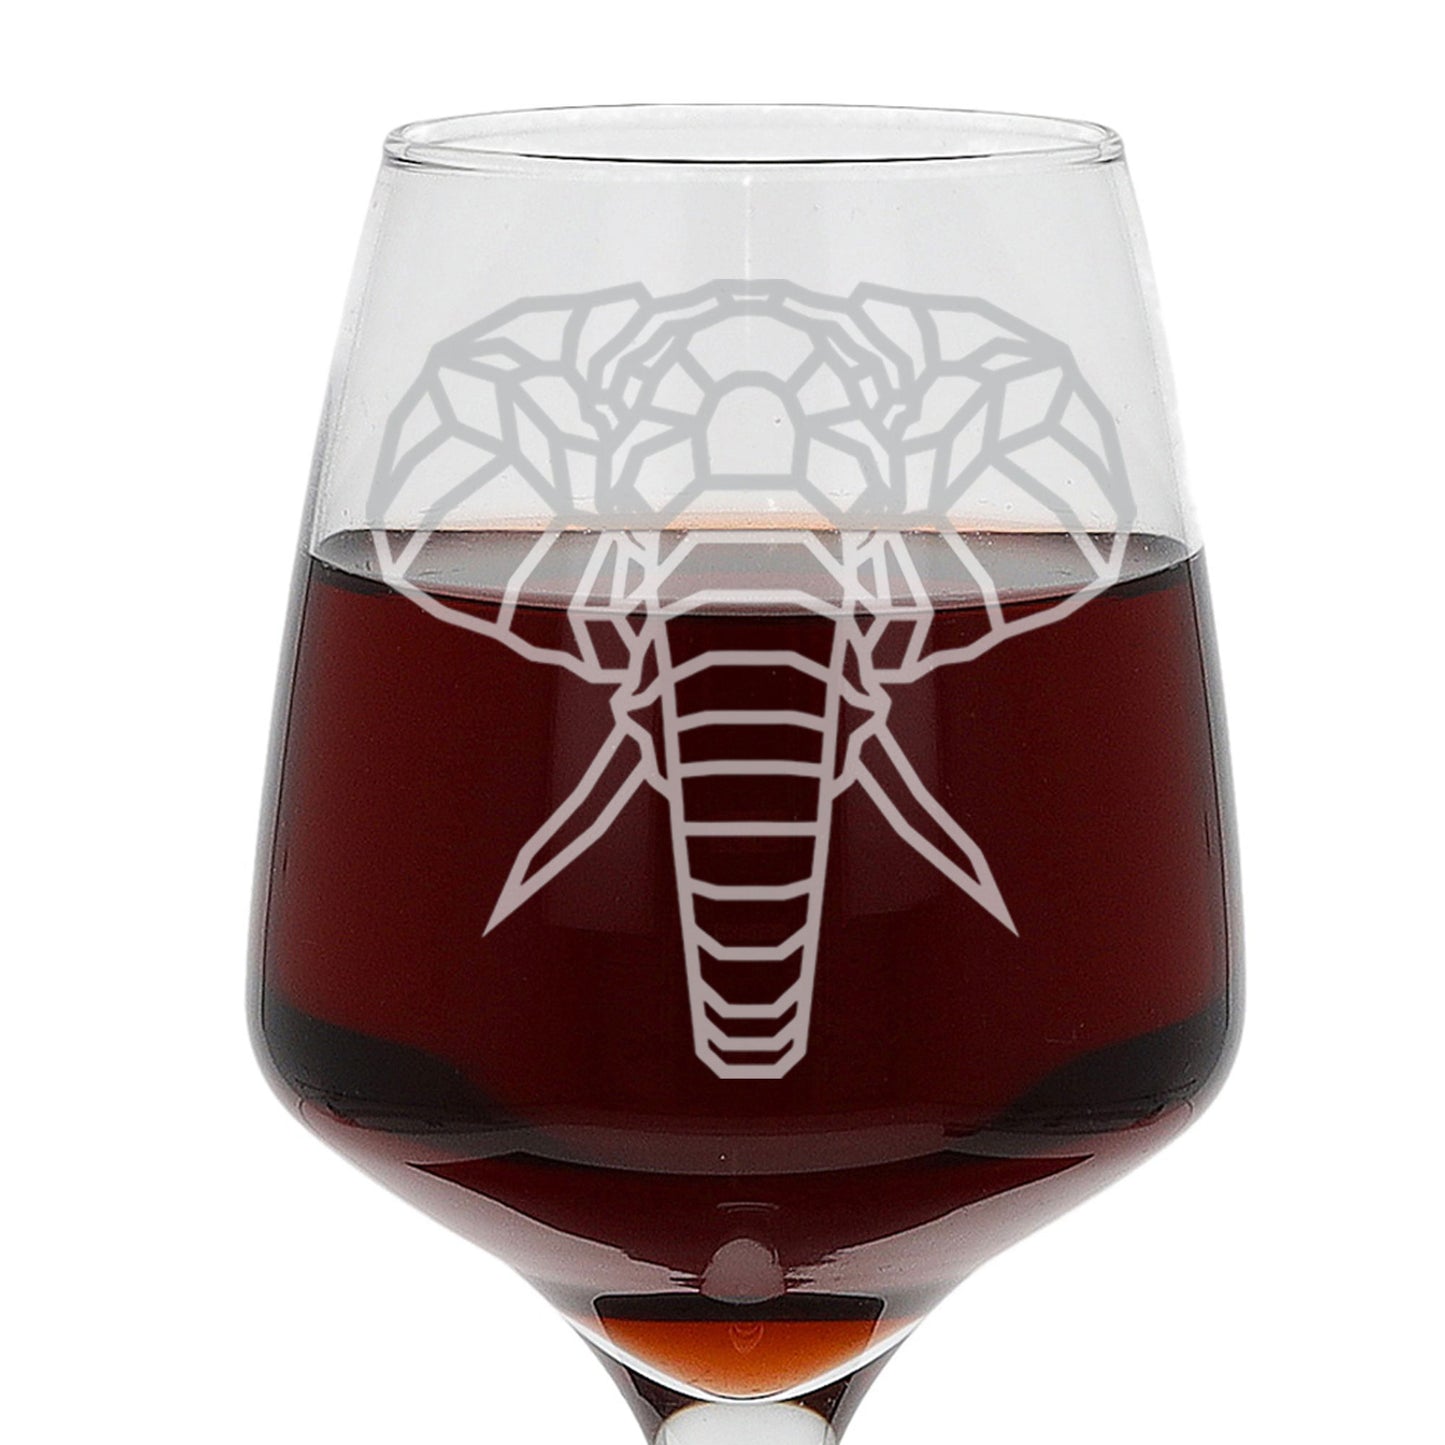 Elephant Engraved Wine Glass  - Always Looking Good -   